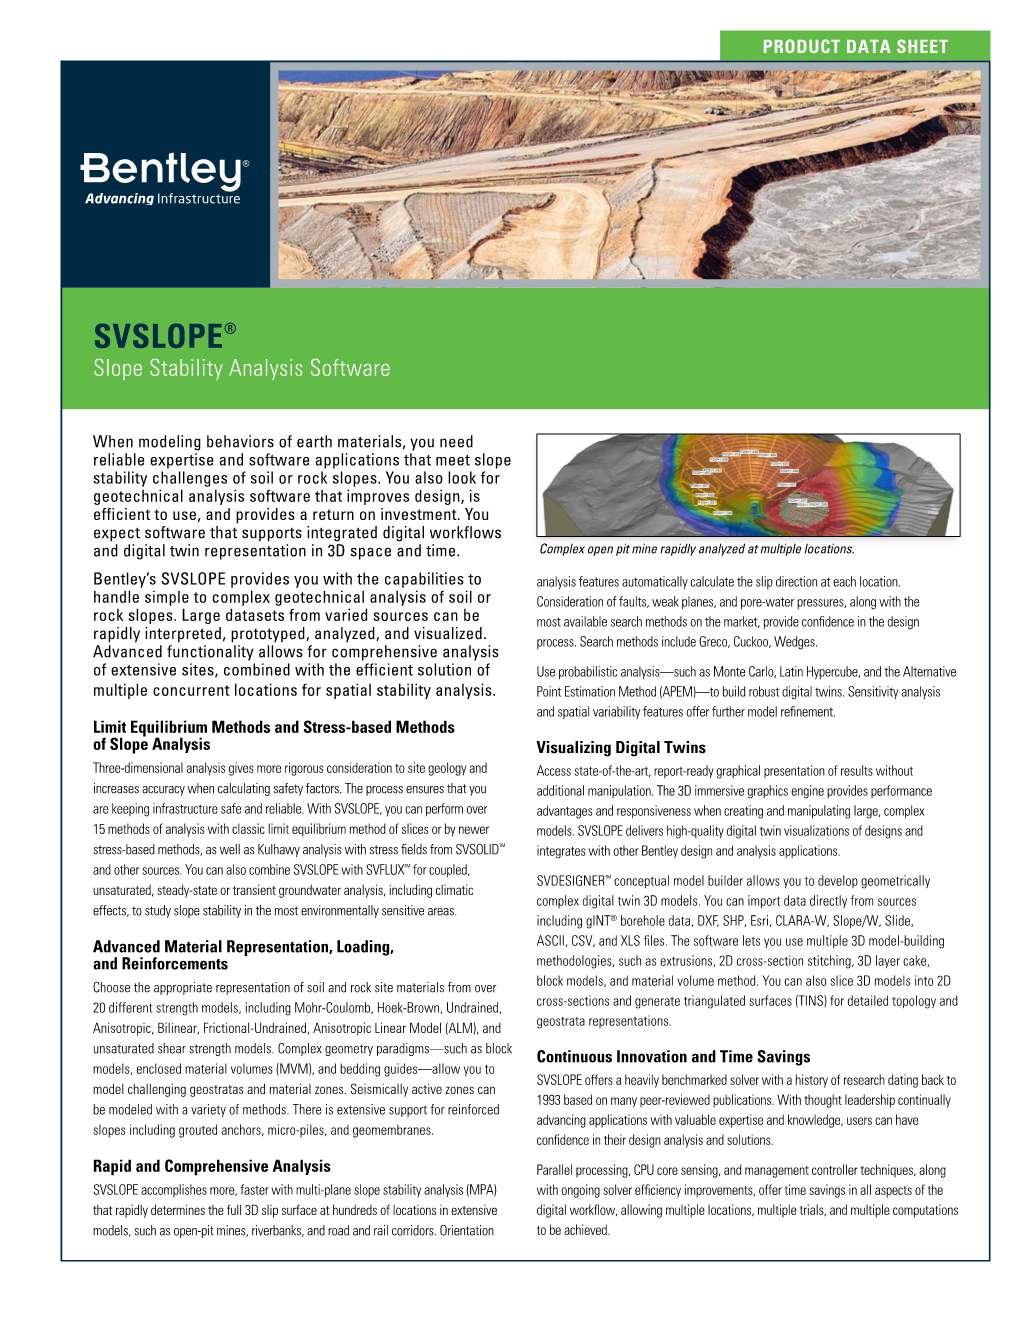 SVSLOPE® Slope Stability Analysis Software